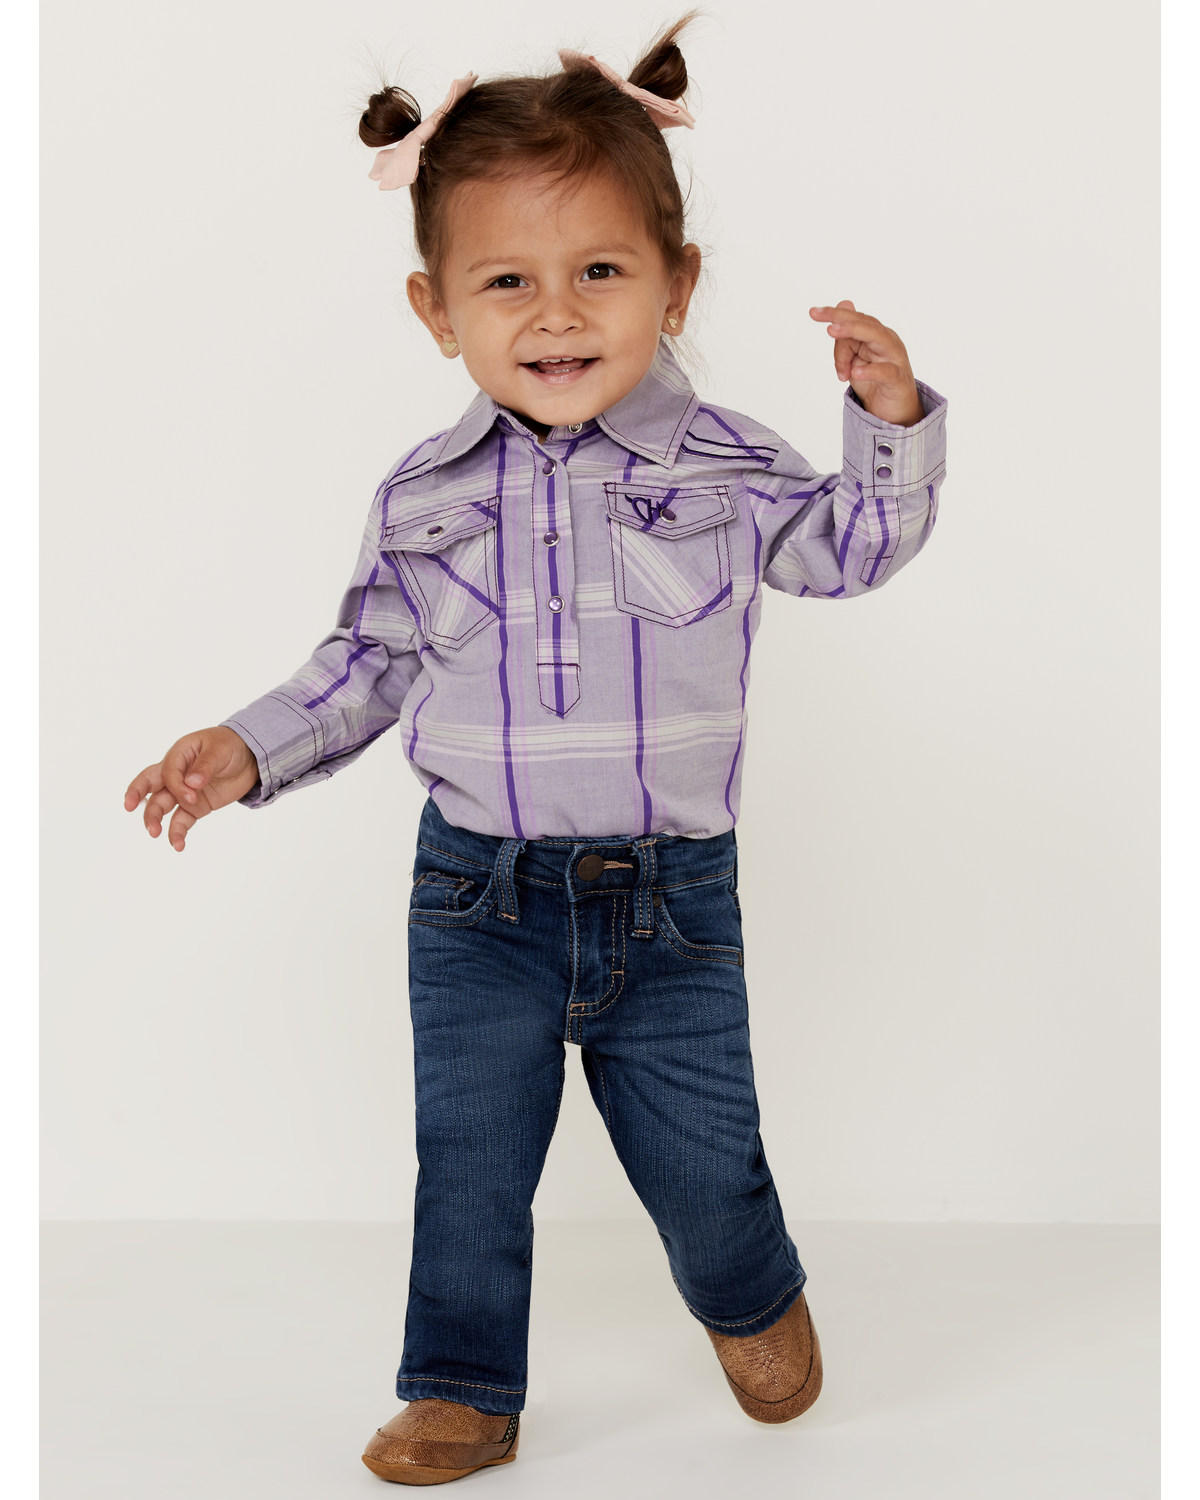 Wrangler Toddler Girls' Western 5 Pocket Skinny Jeans